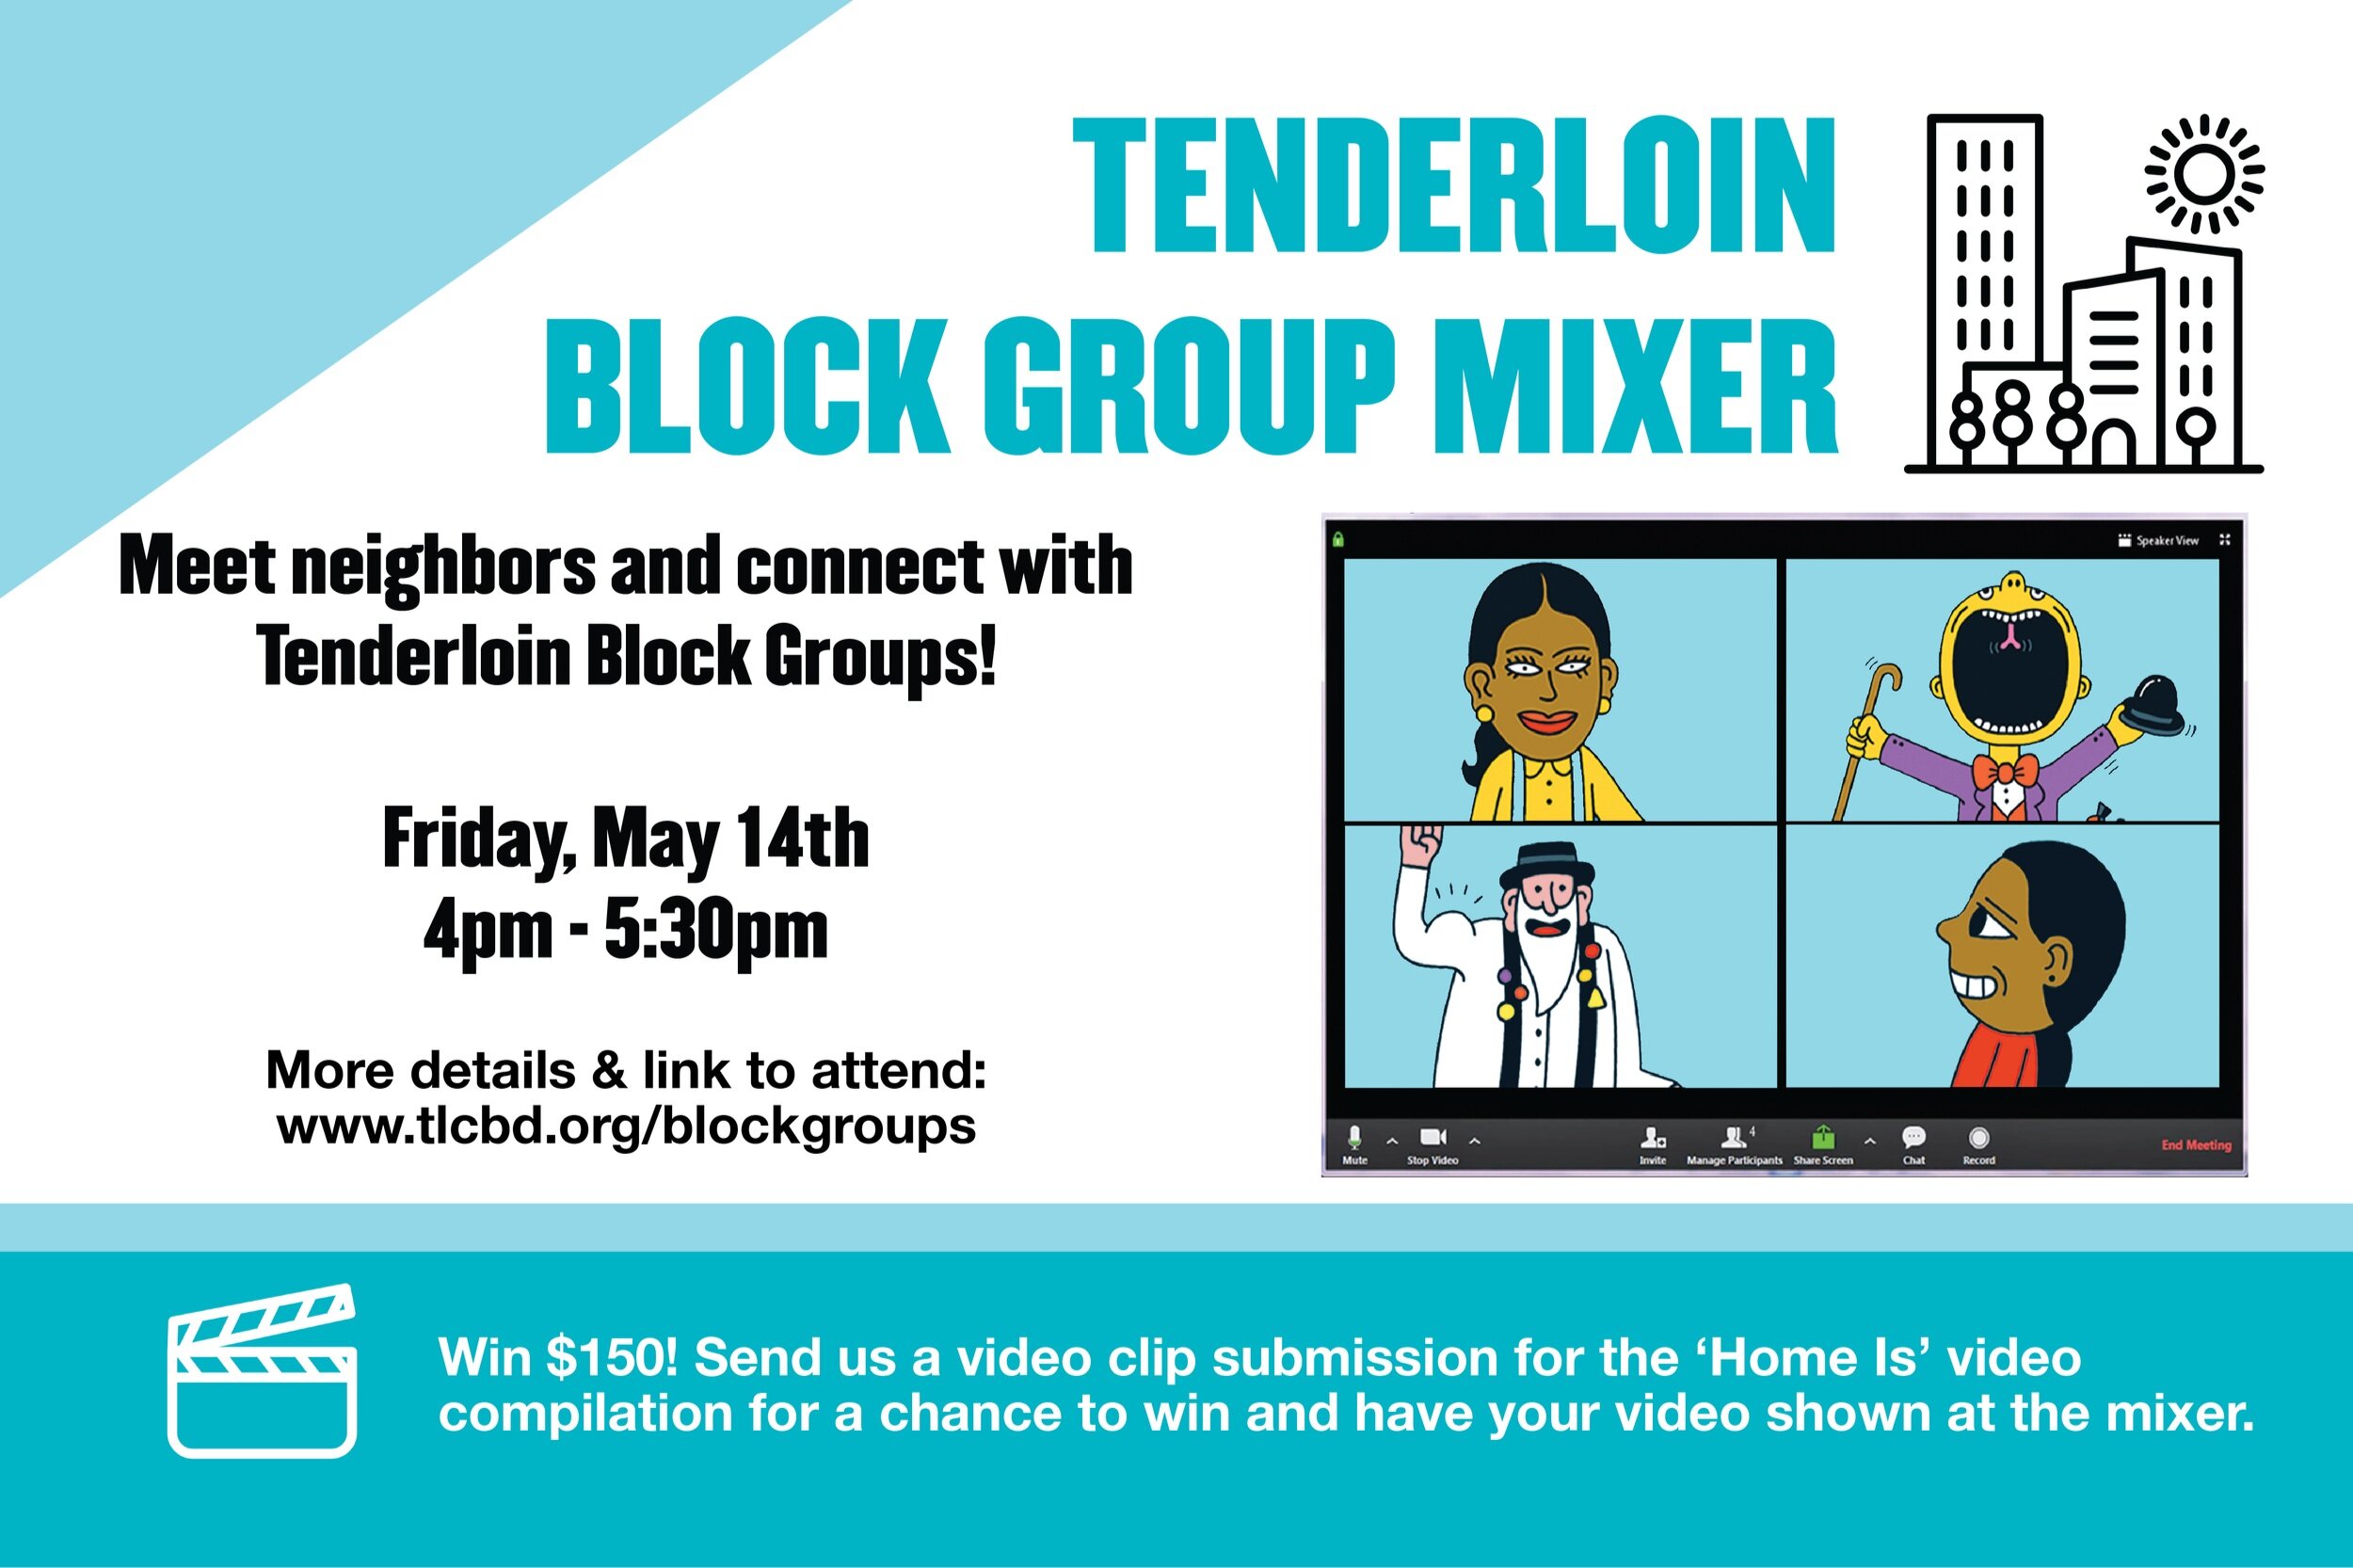 Join Us for the Tenderloin Block Group Mixer! (Fri, May 14)